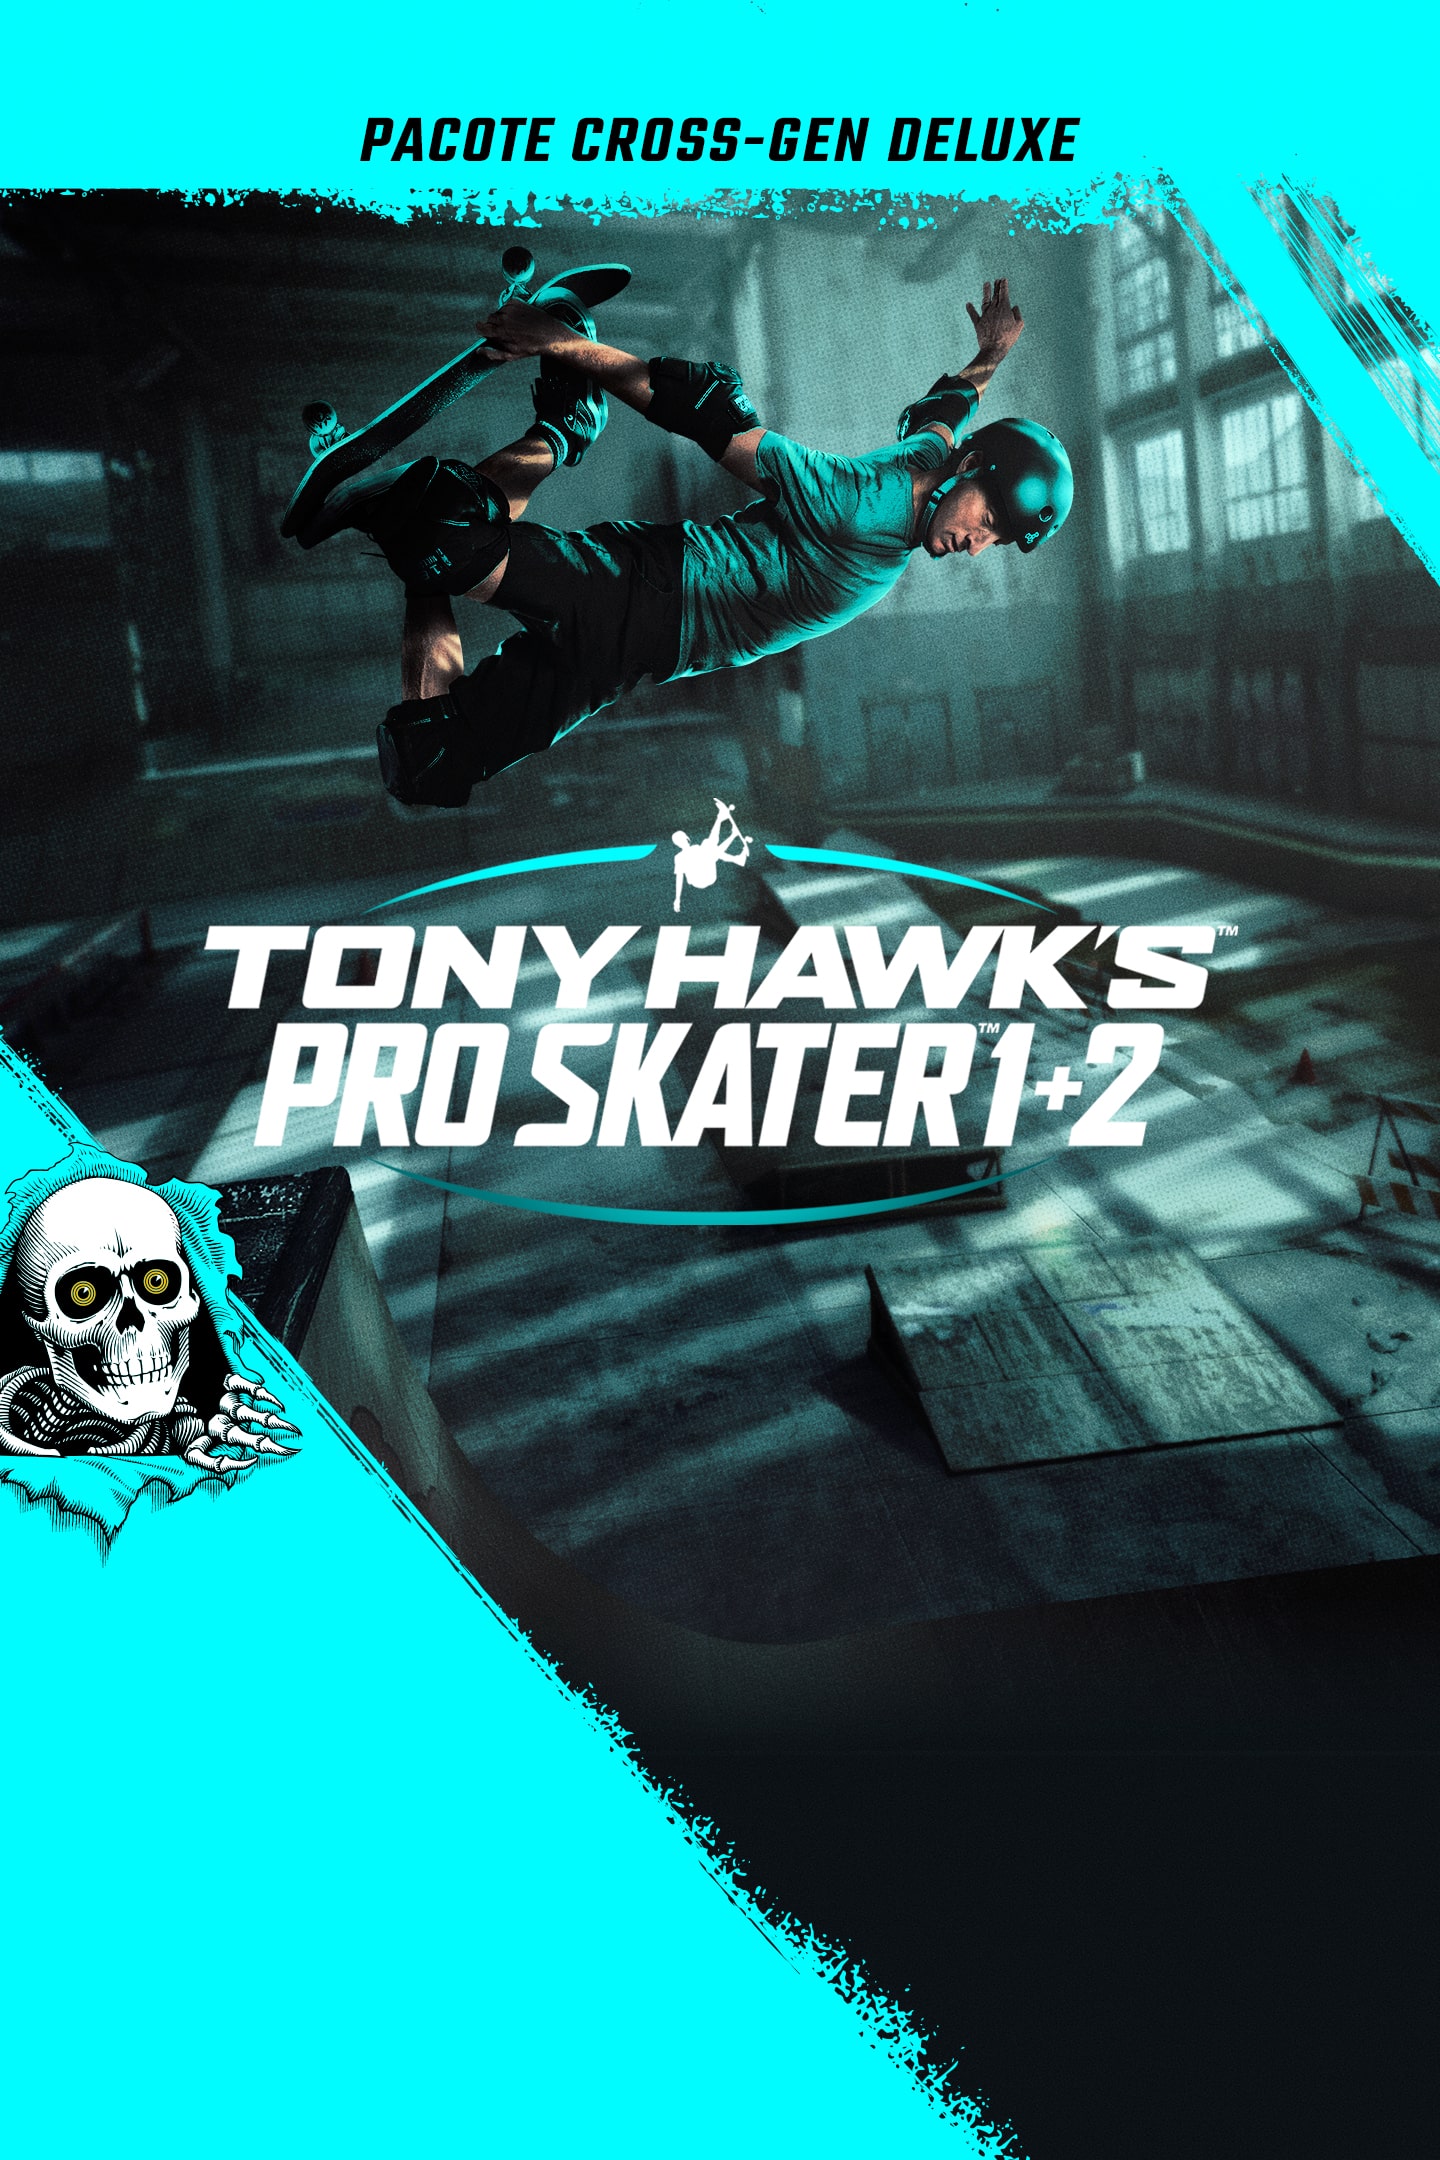 Tony Hawk's Pro Skater 1 + 2: o reencontro, é na casa de partida – Rubber  Chicken